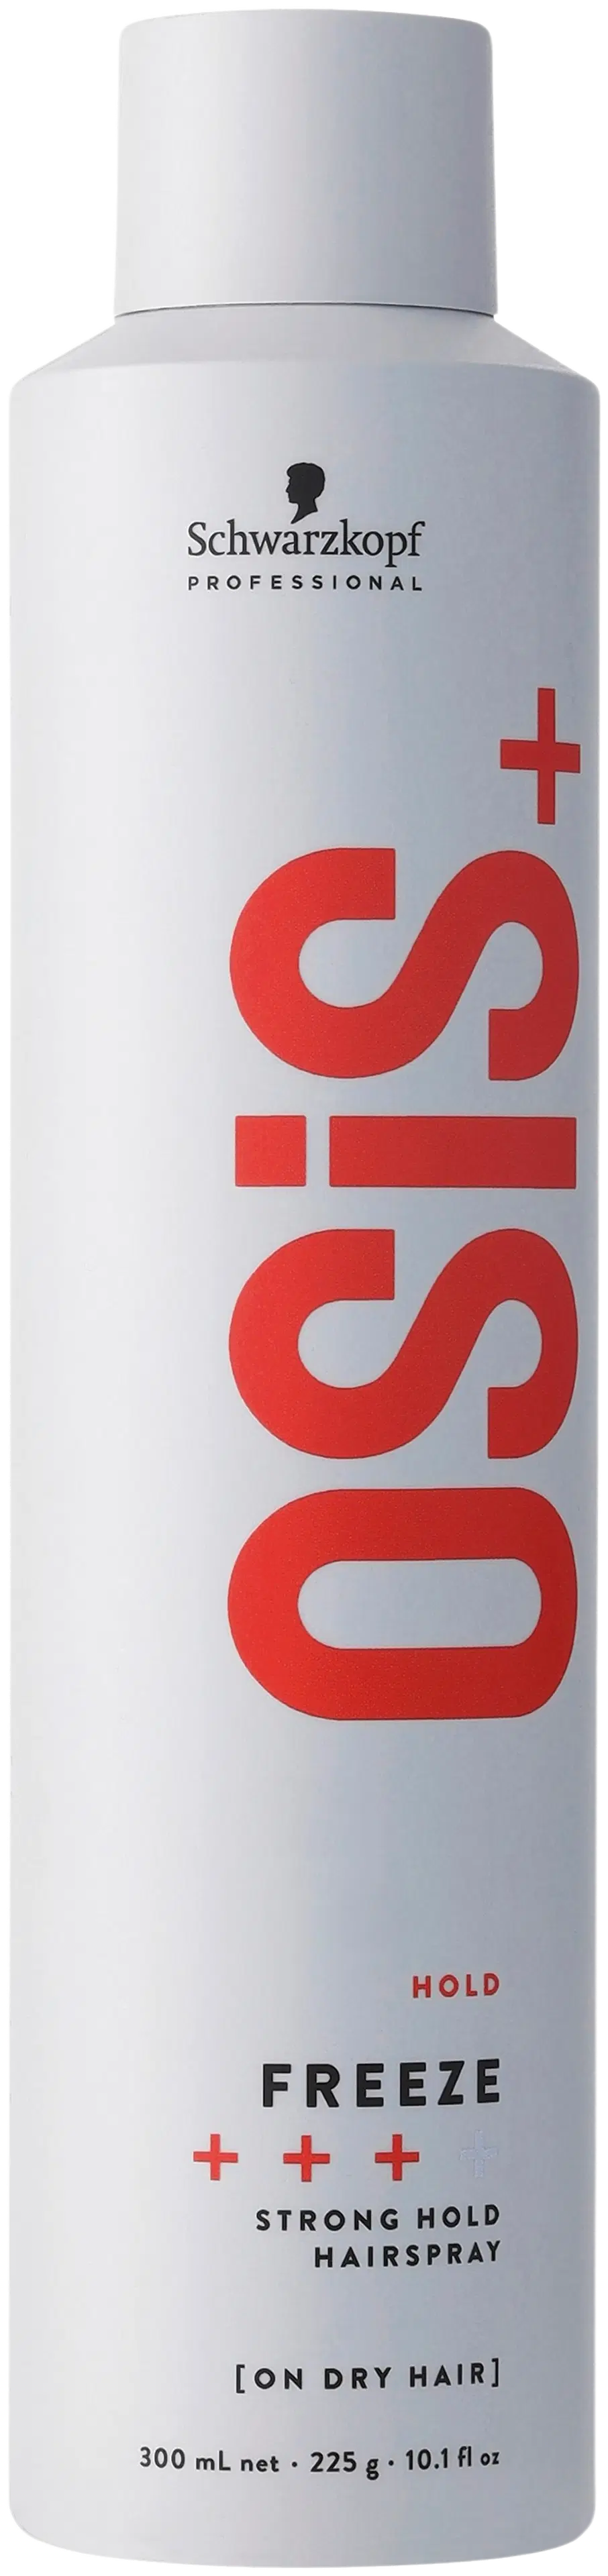 Schwarzkopf Professional OSiS+ Freeze voimakas hiuskiinne 300 ml